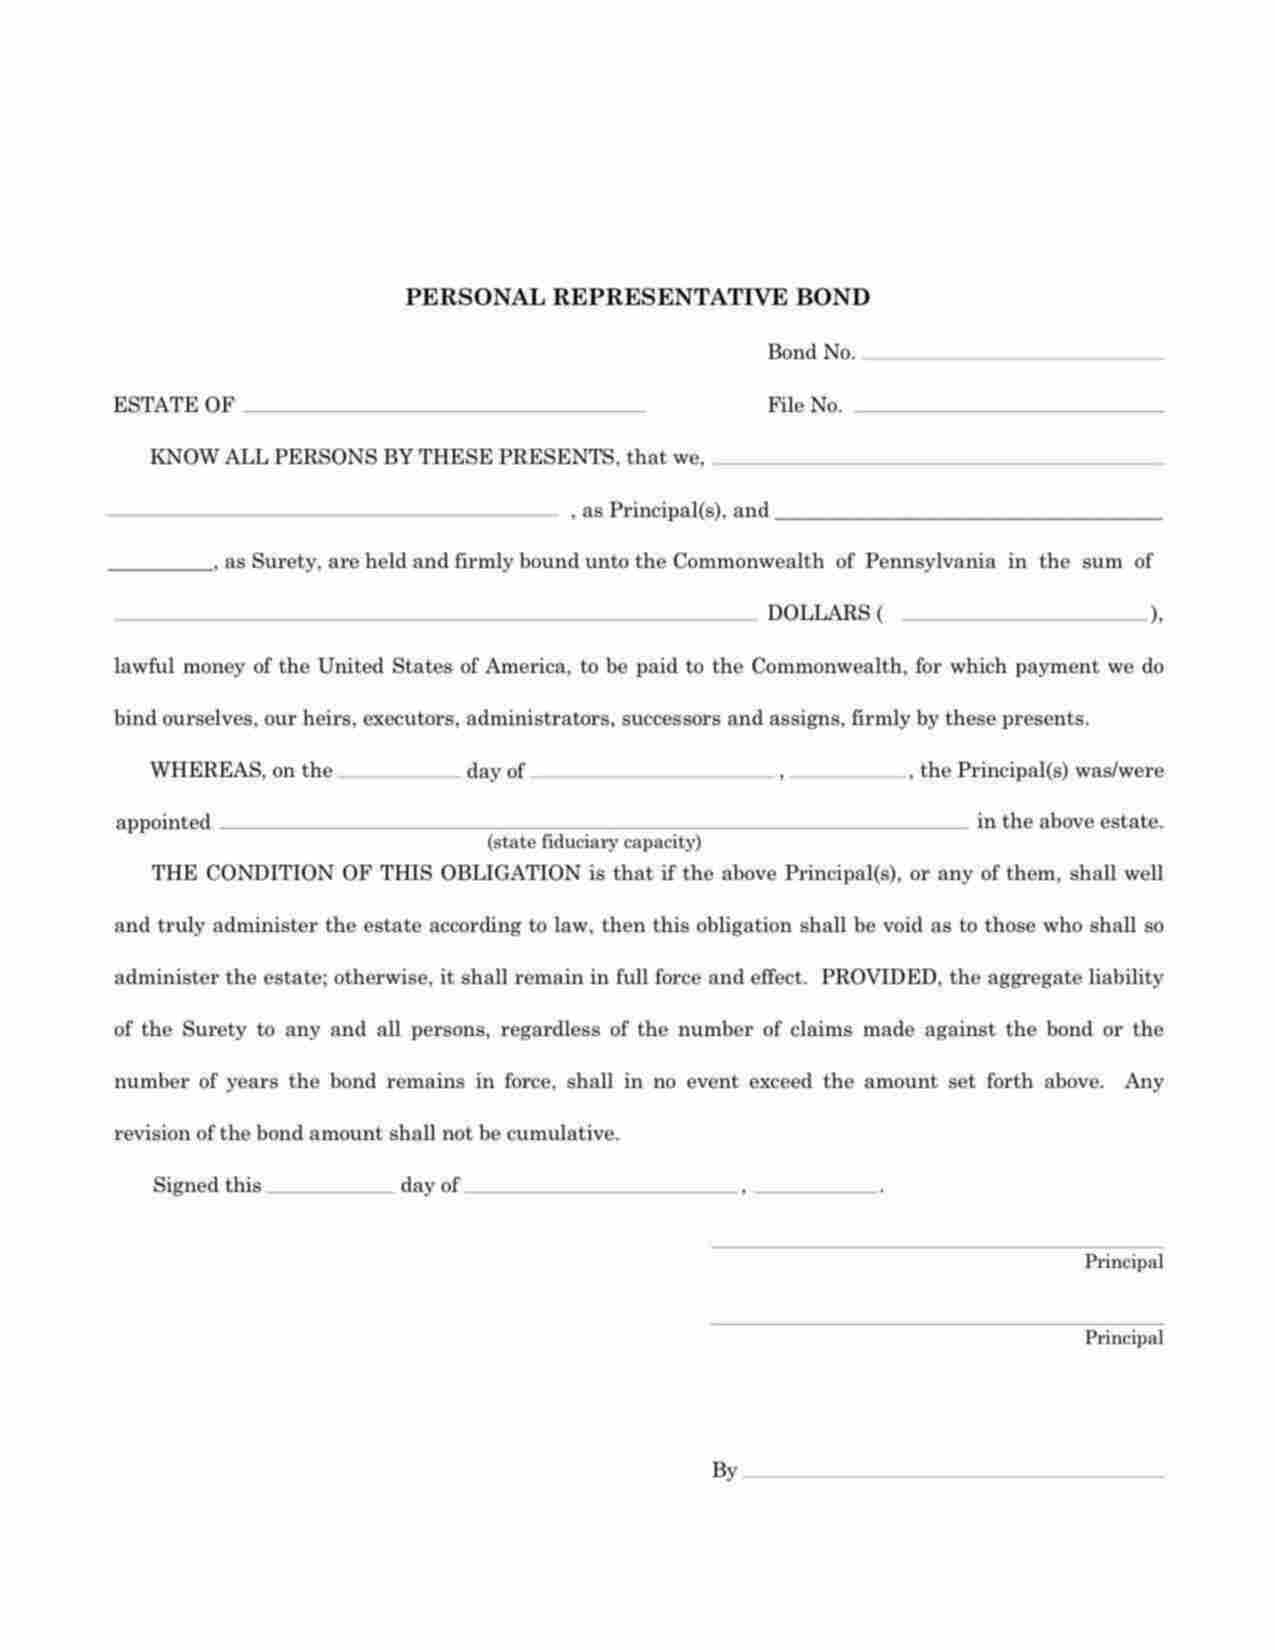 Pennsylvania Personal Representative Bond Form